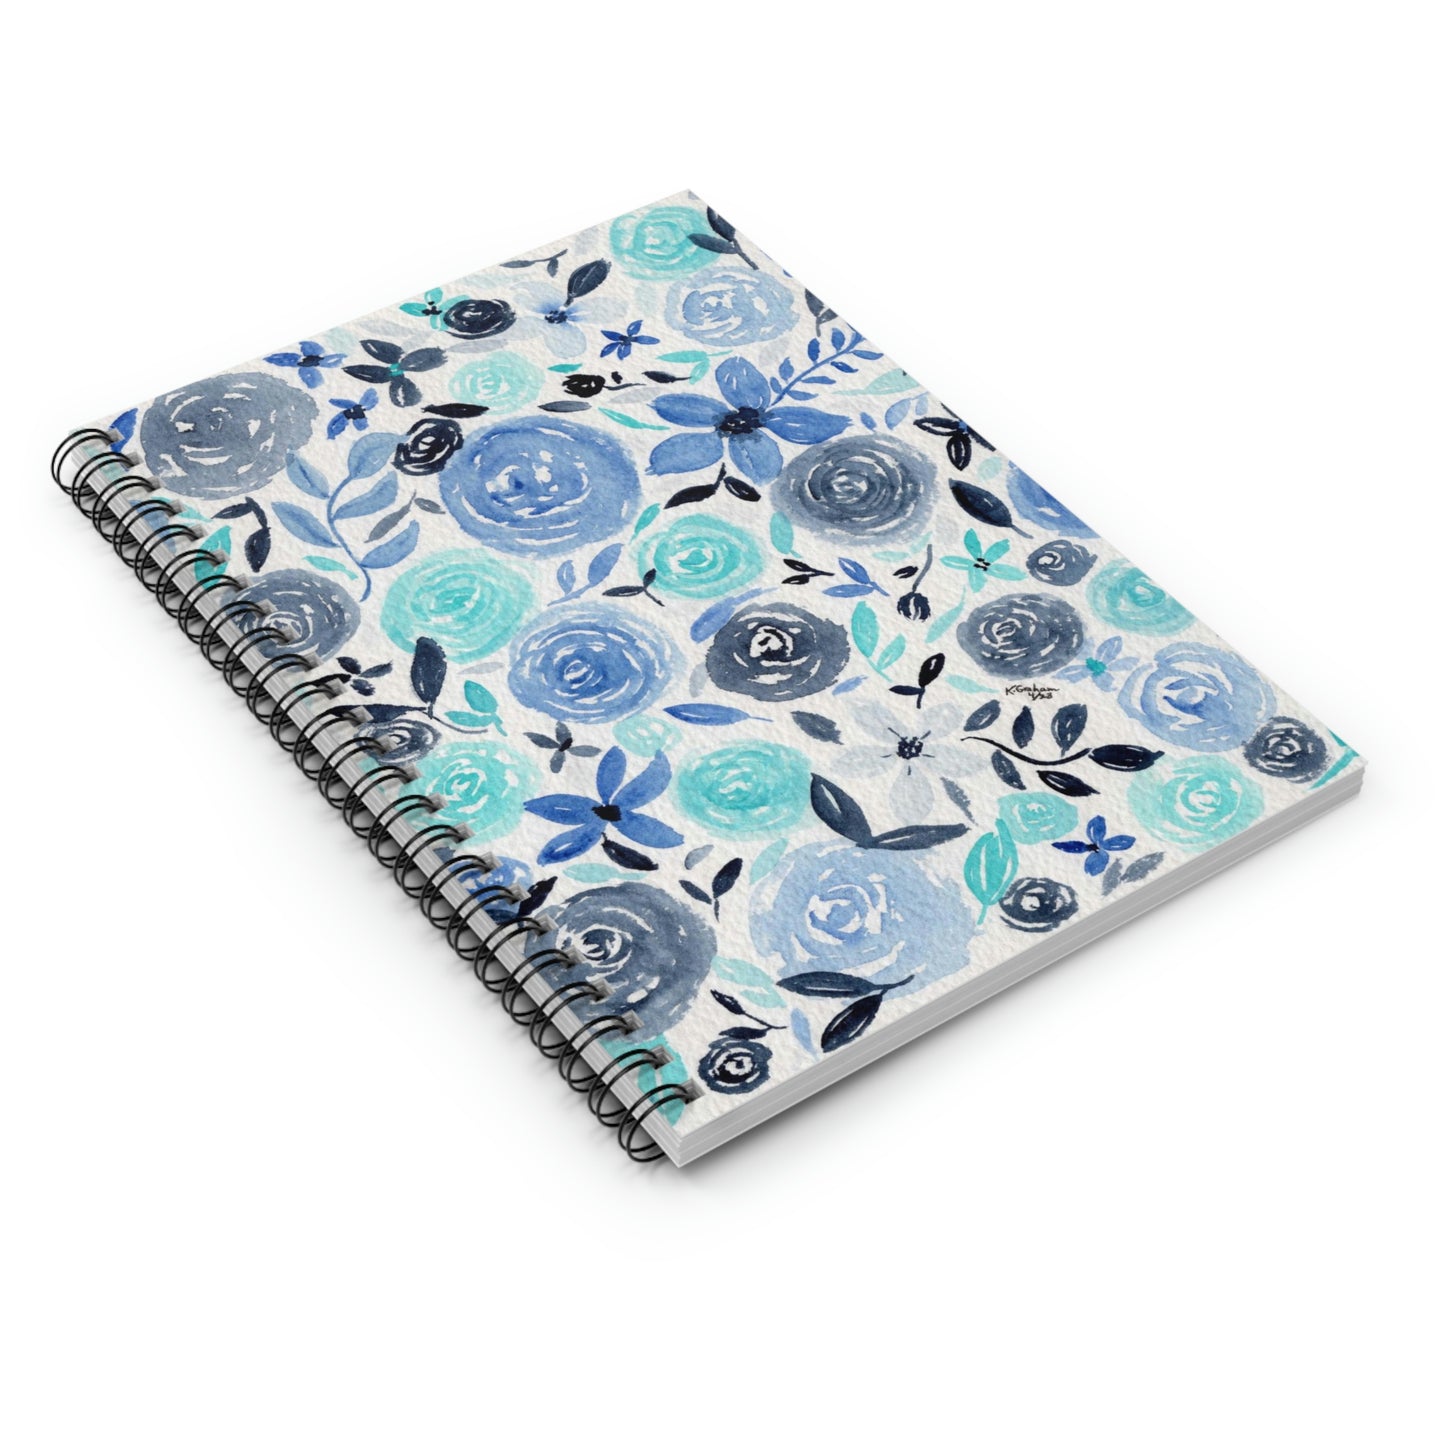 Bright Blue Floral Spiral Notebook